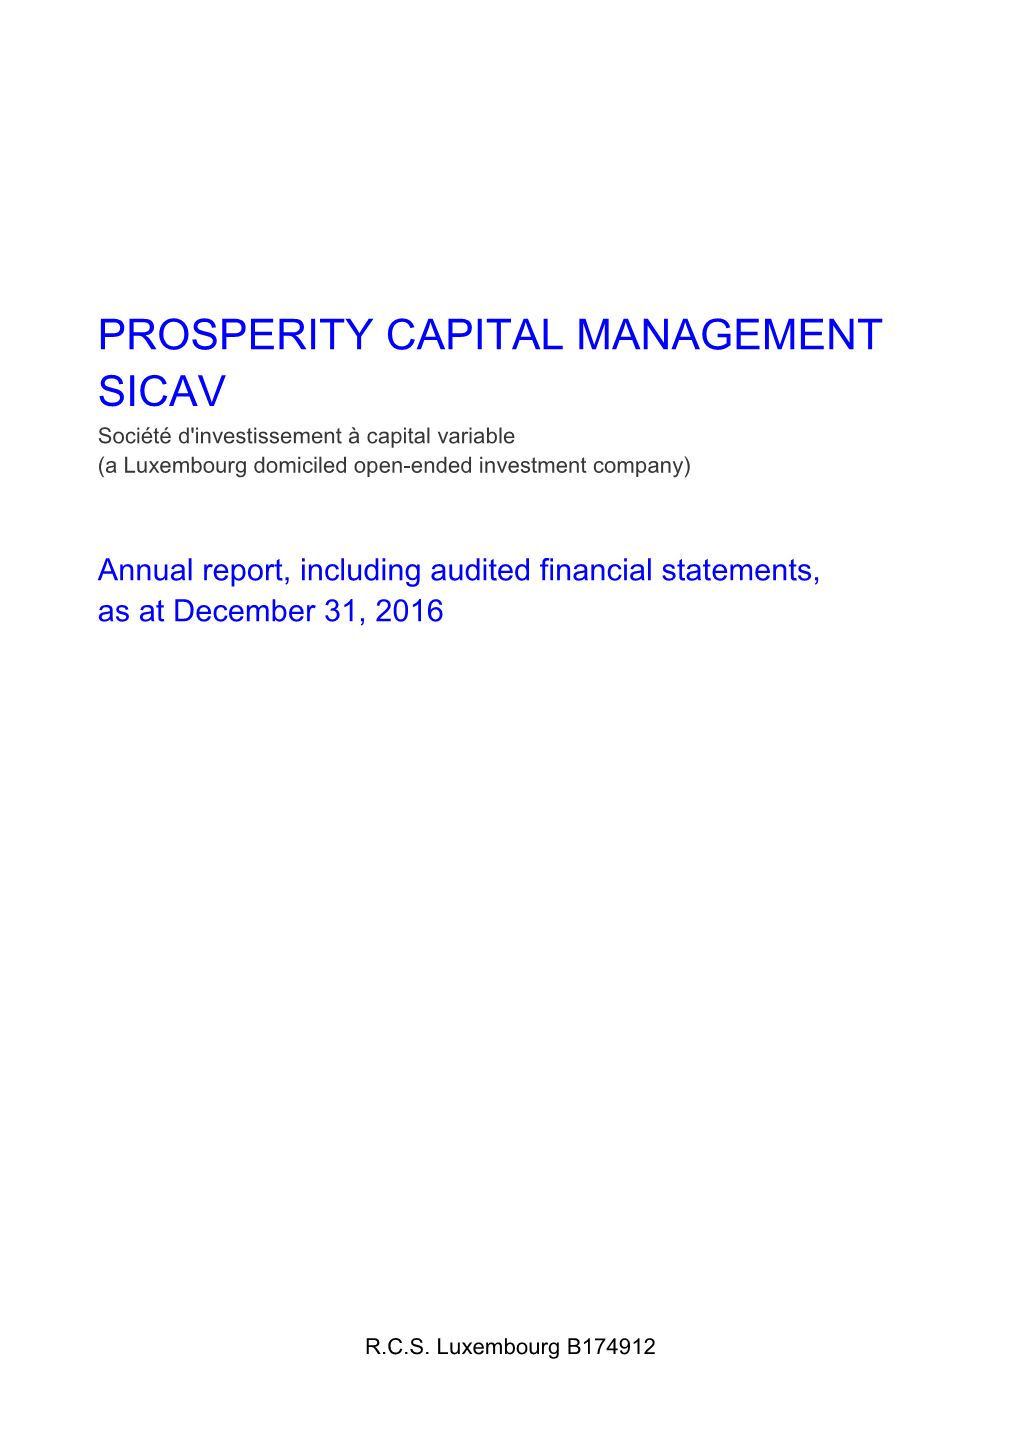 PROSPERITY CAPITAL MANAGEMENT SICAV Société D'investissement À Capital Variable (A Luxembourg Domiciled Open-Ended Investment Company)